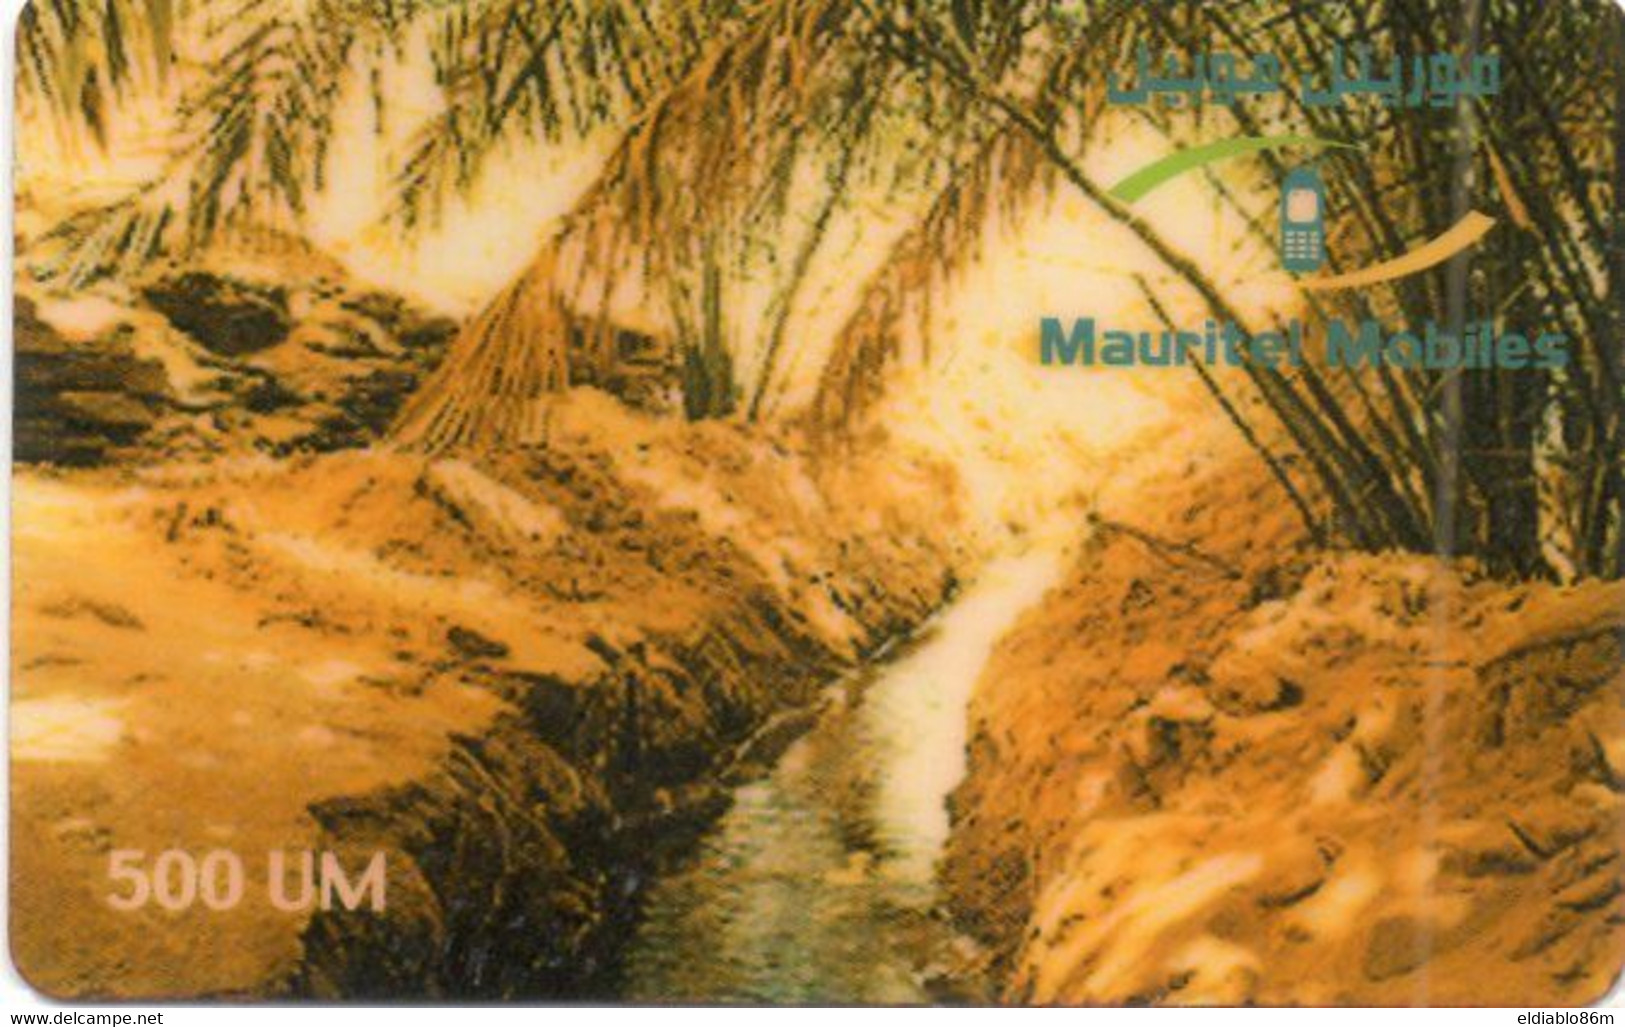 MAURITANIA - PREPAID - MAURITEL MOBILES - OASI - 31/12/2002 - Mauritania